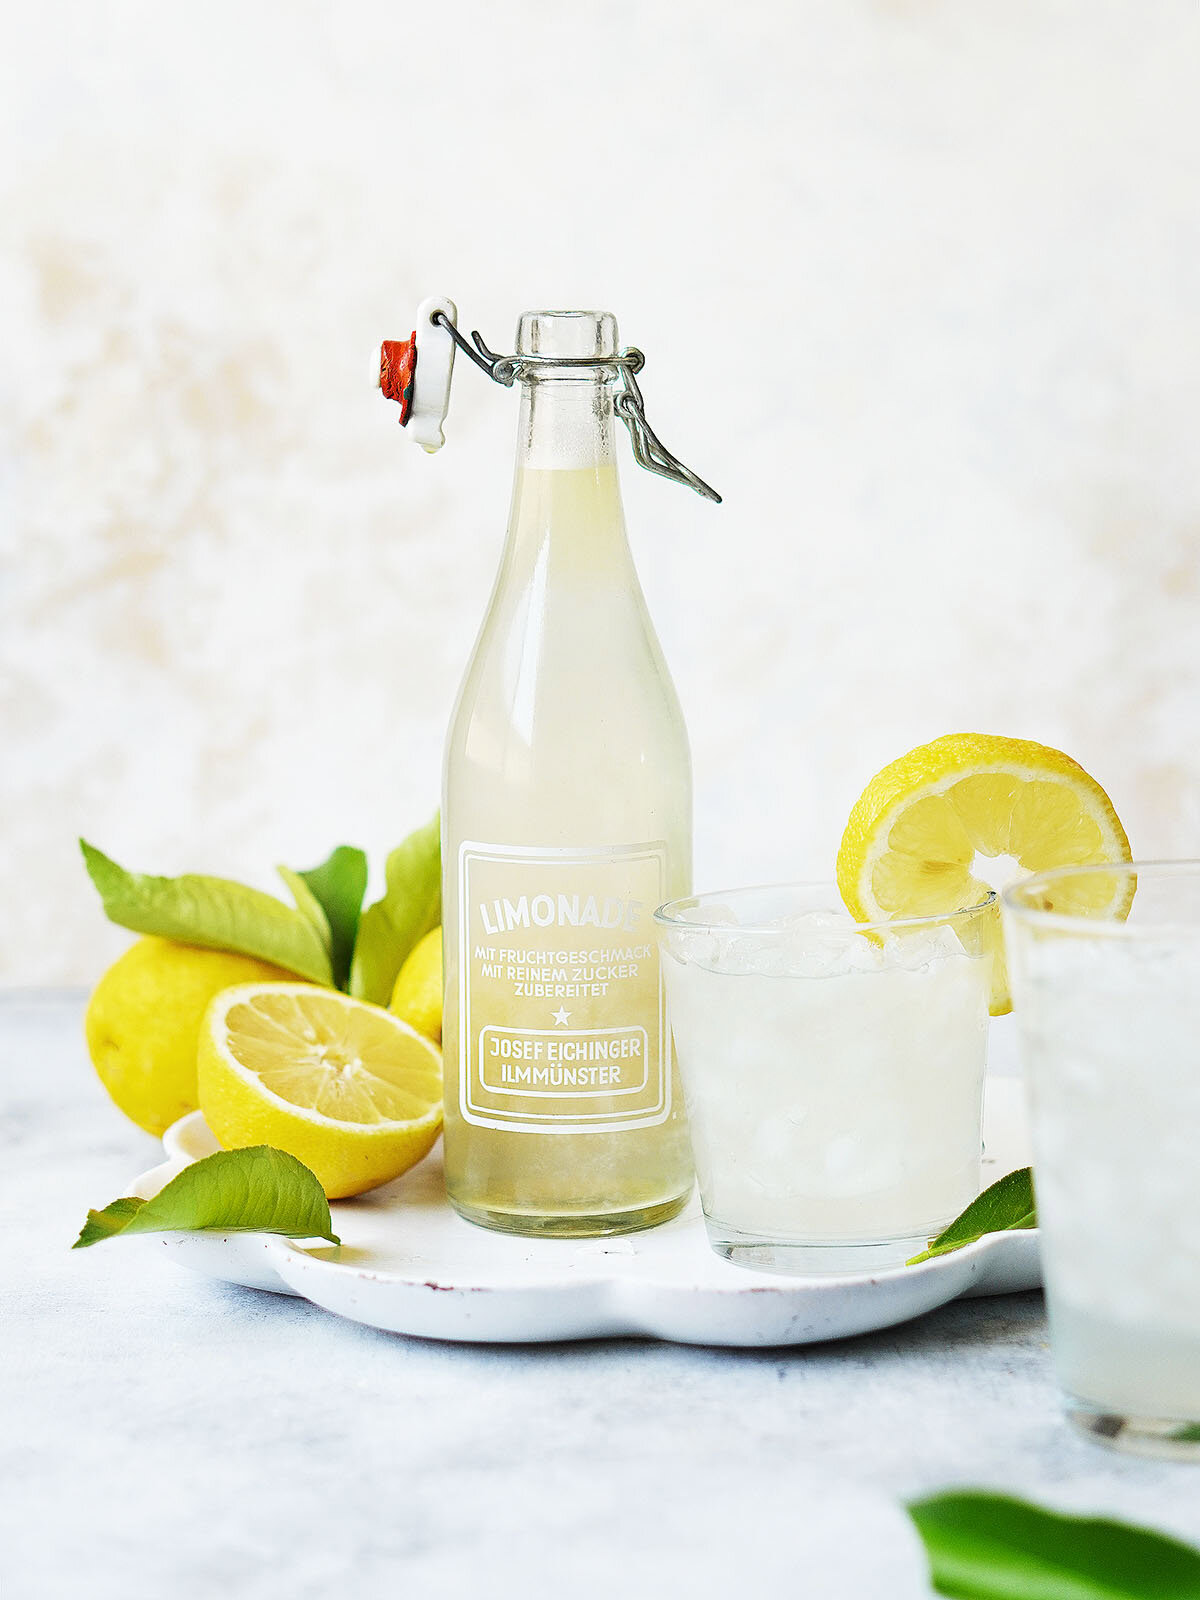 Lemonade in a glass container, next to a glass full of lemonade, on the side fresh lemons.